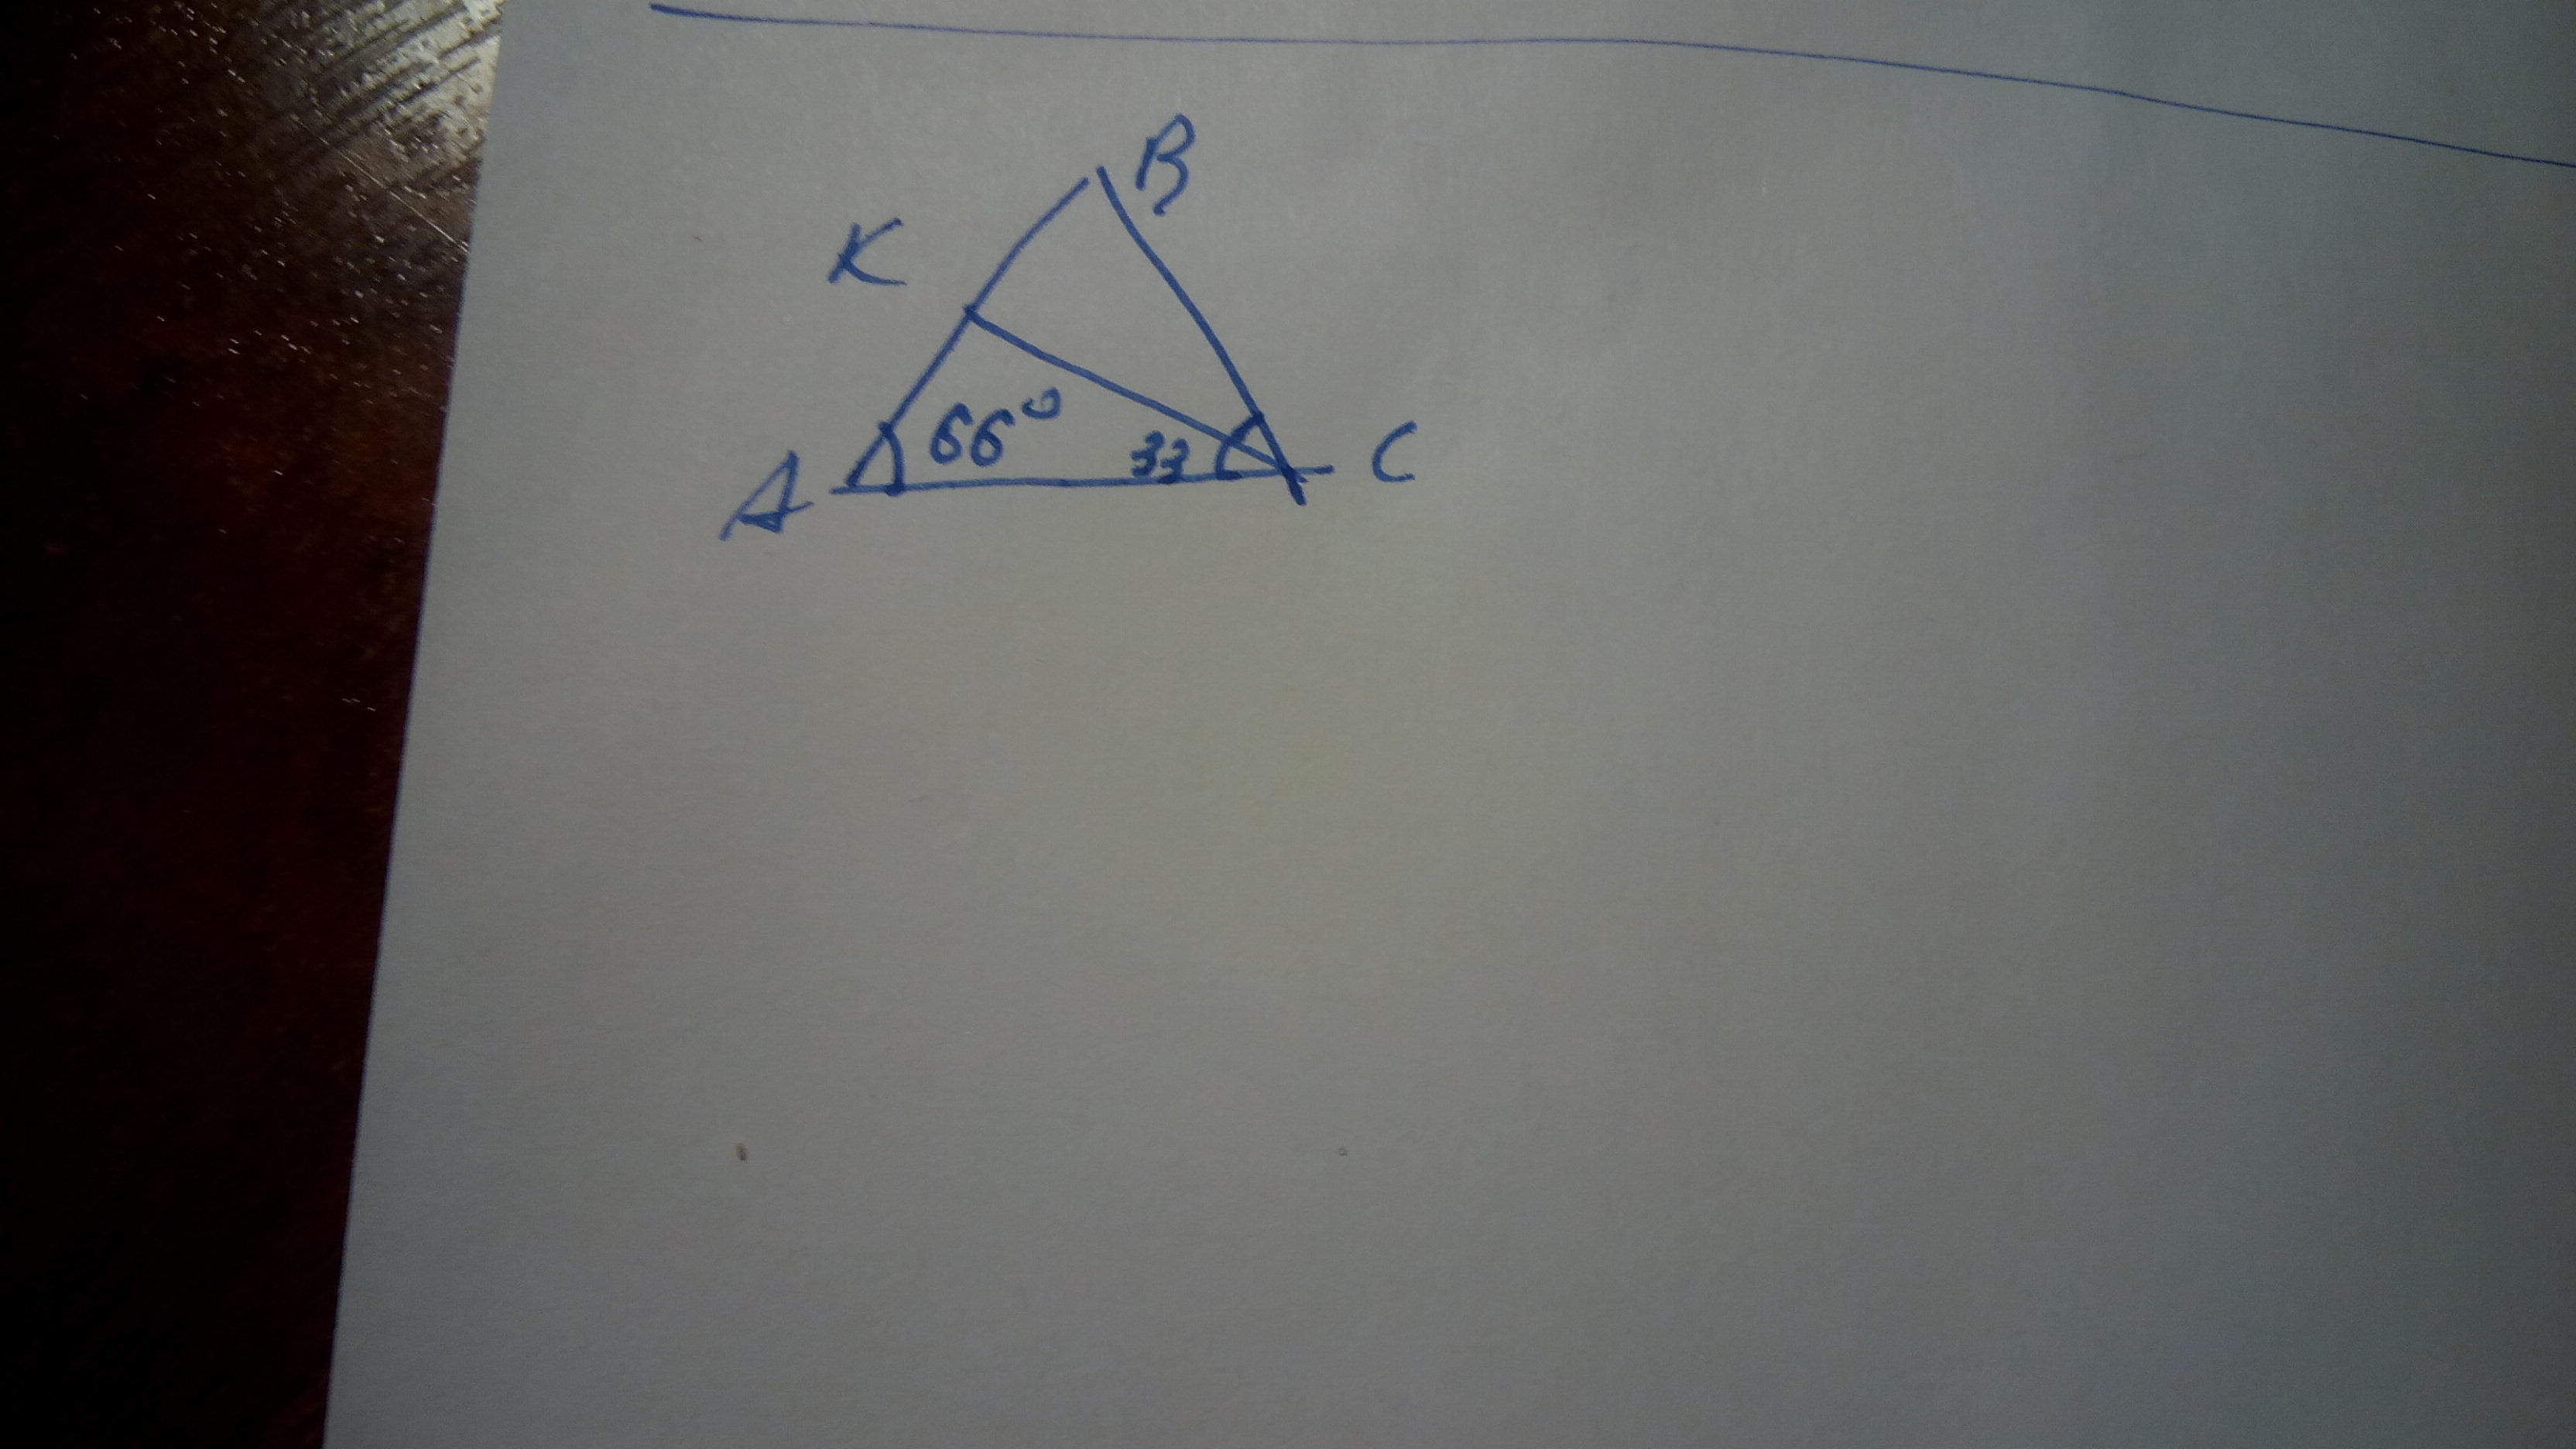 Треугольник абс аб равно бц. Найдите на треугольнике углы АБЦ. В треугольнике ABC угол a равен 40 градусов а биссектриса CF.